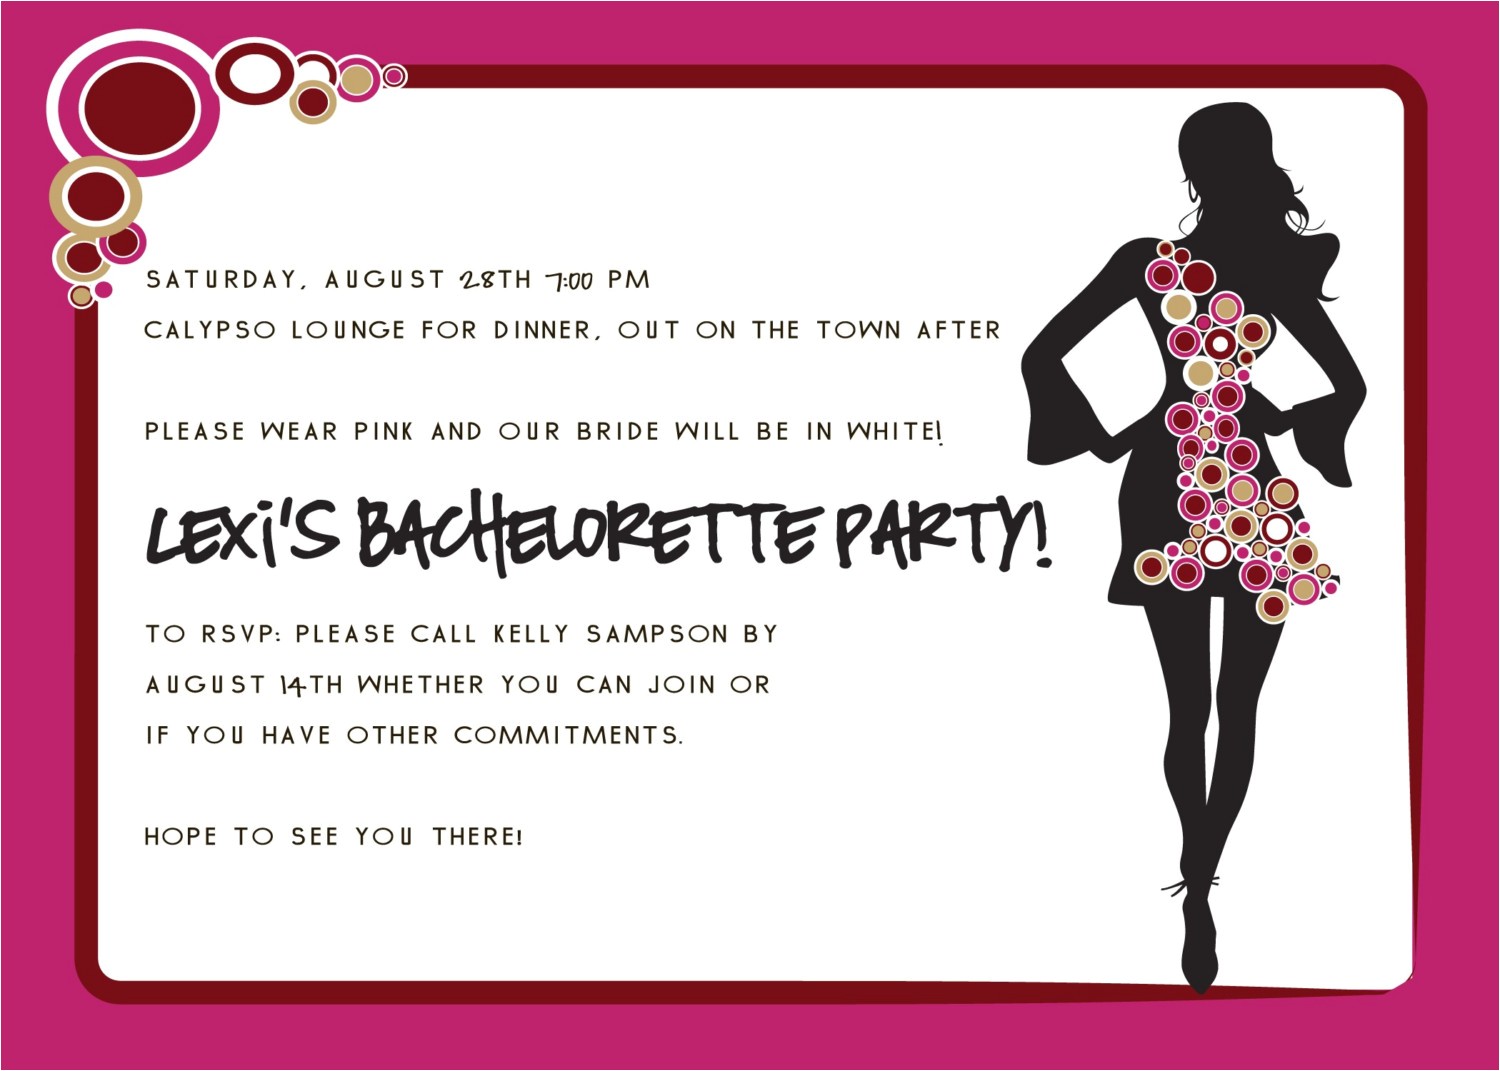 bachelorette party invitation wording